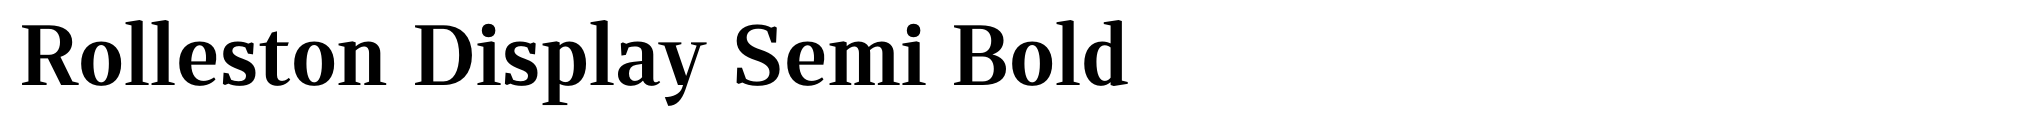 Rolleston Display Semi Bold image